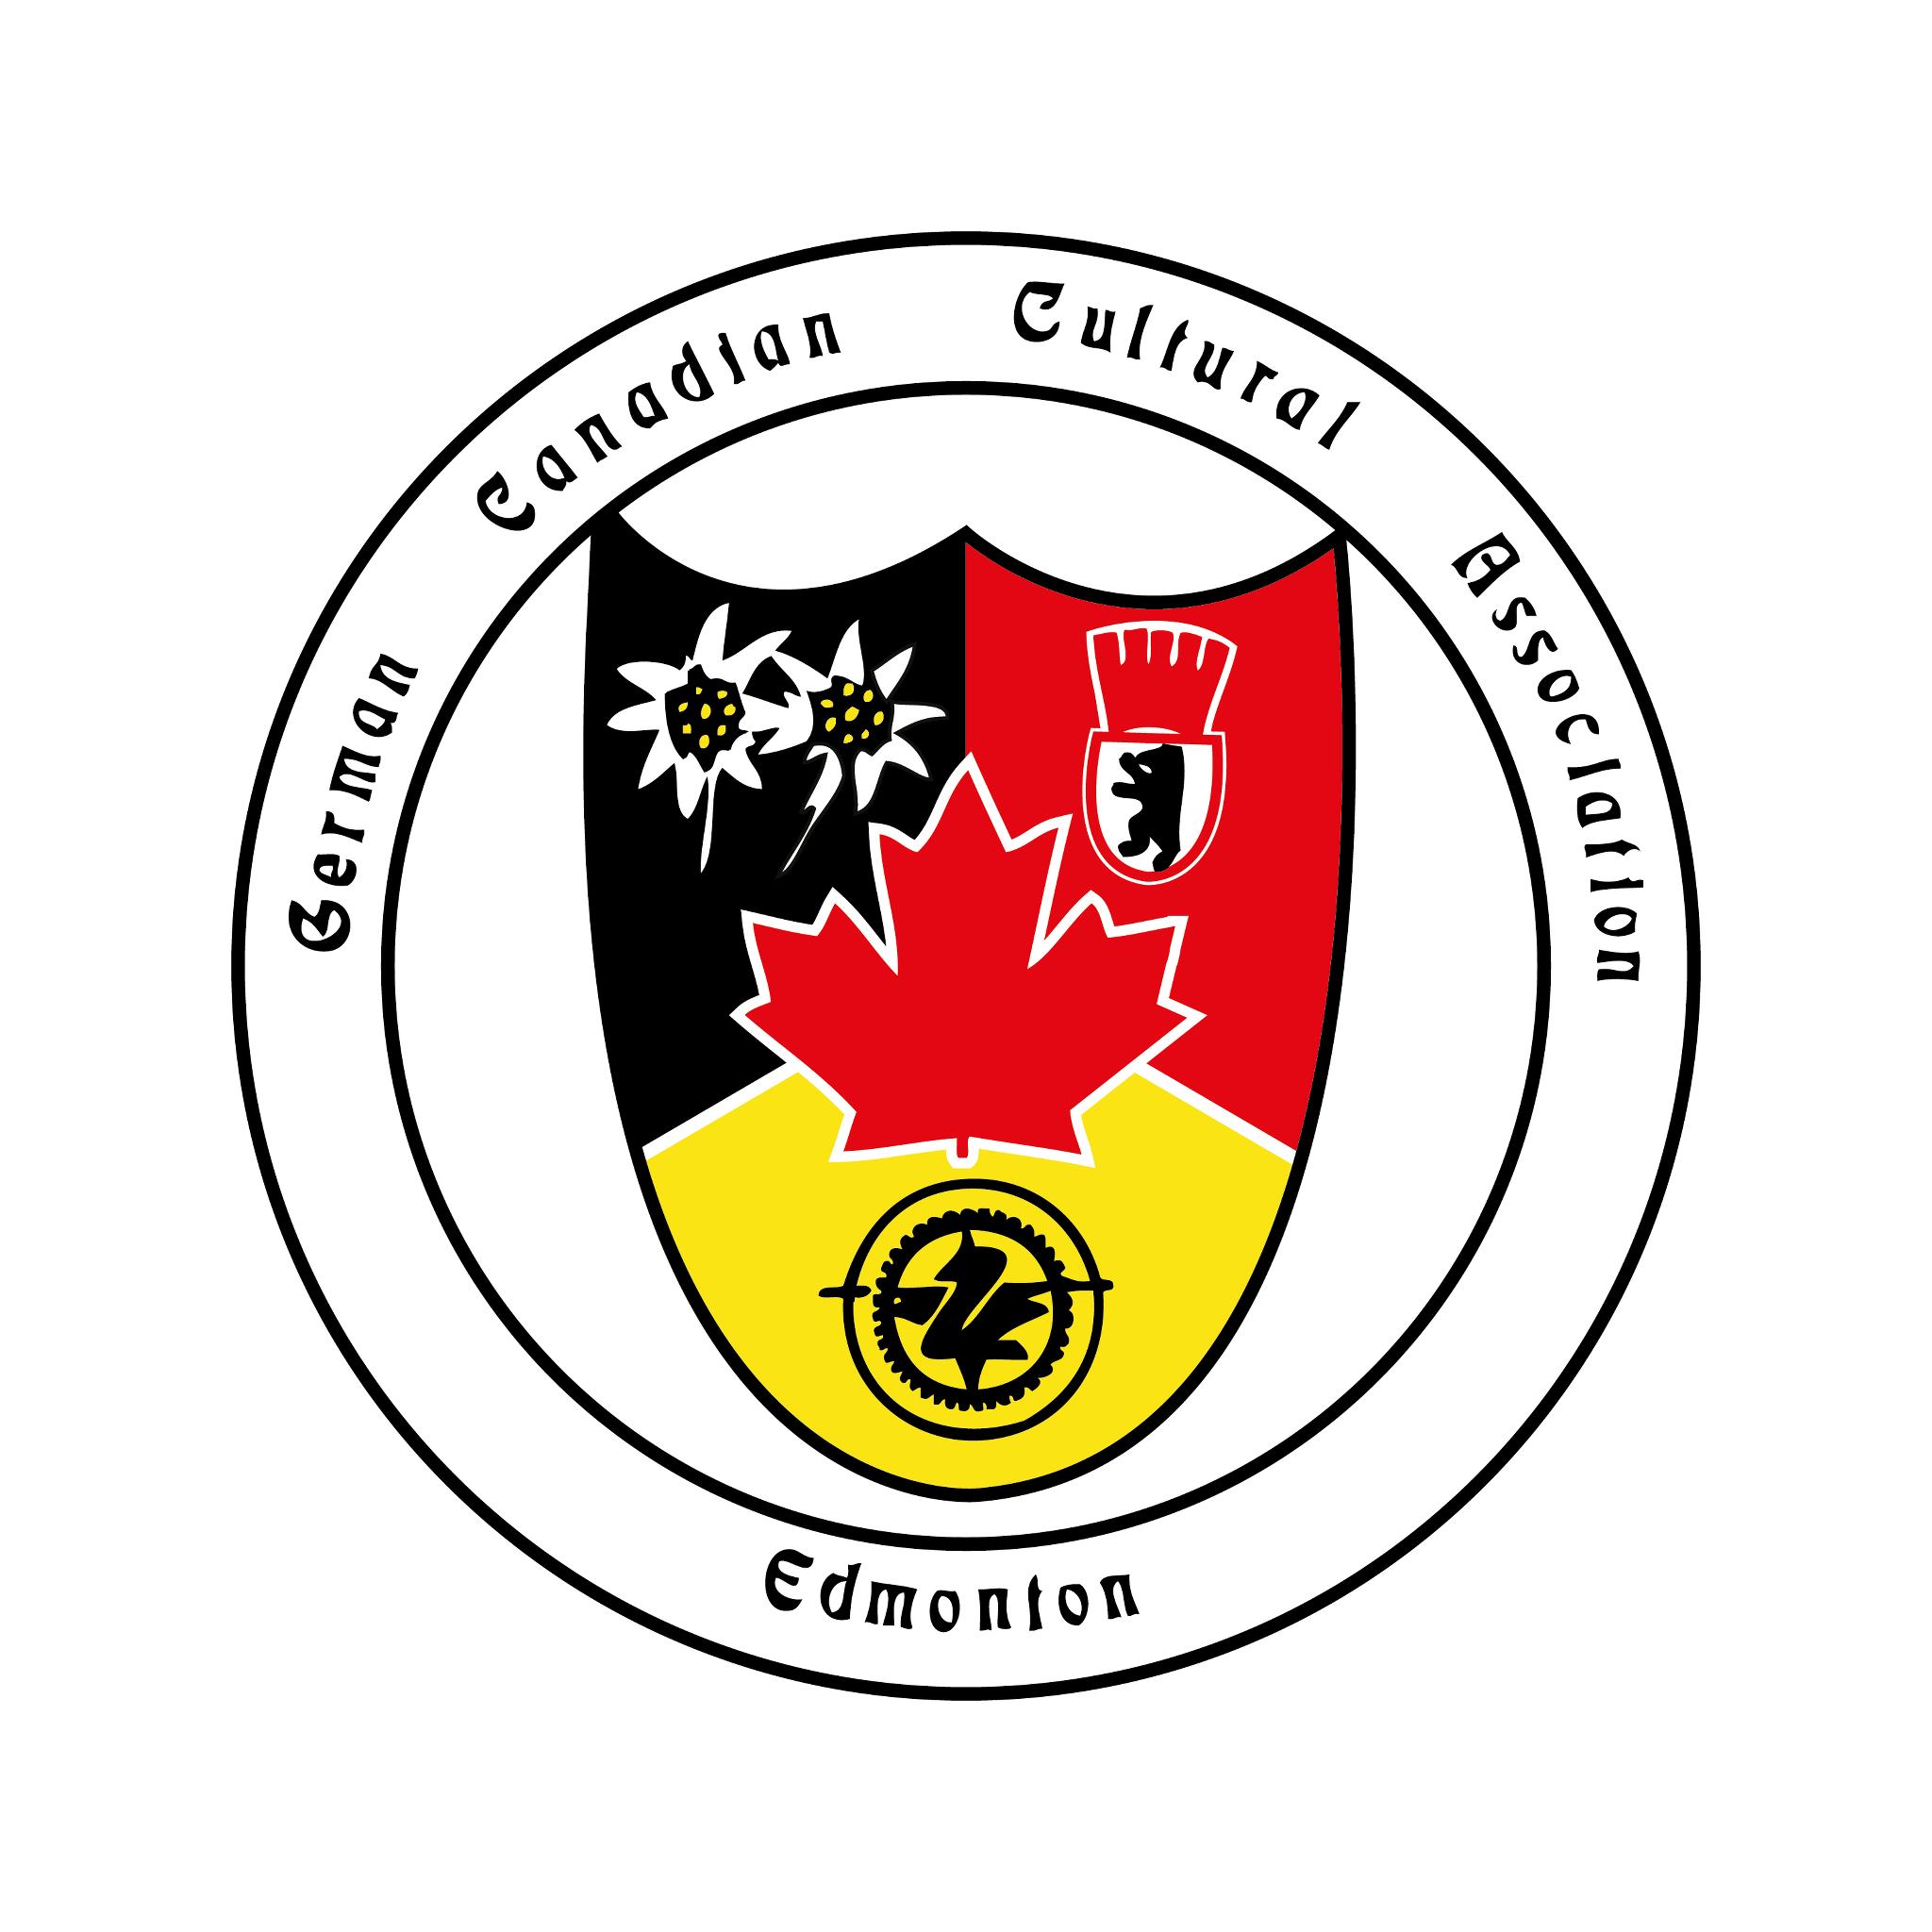 German Organizations in Calgary Alberta - German Canadian Cultural Association of Edmonton